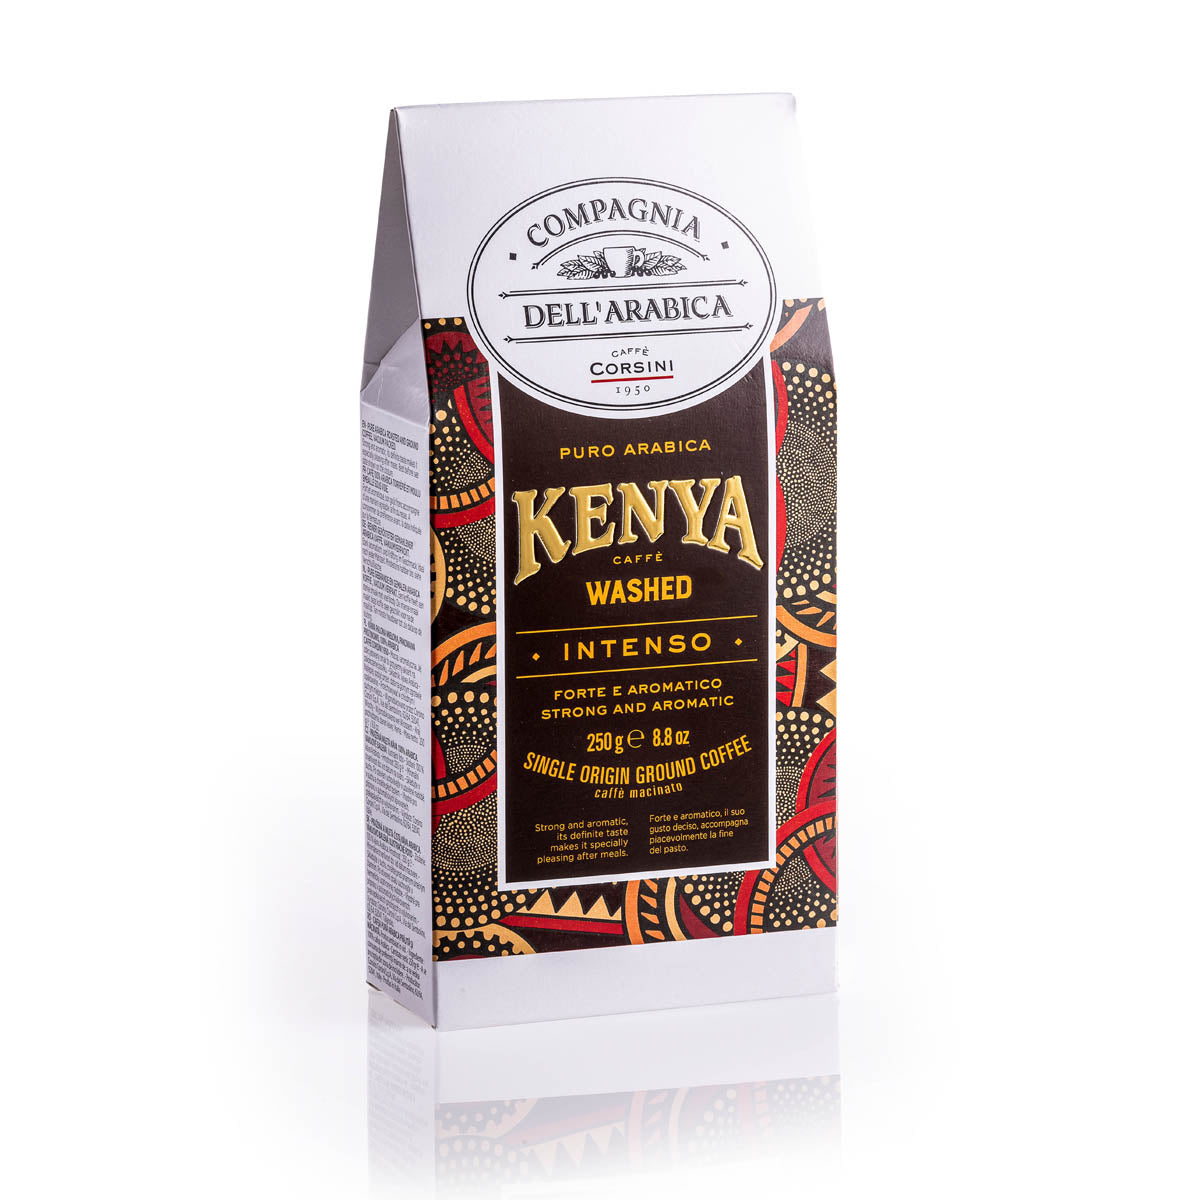 Caffè macinato | Kenya Washed | 100% Arabica | Confezione da 125g